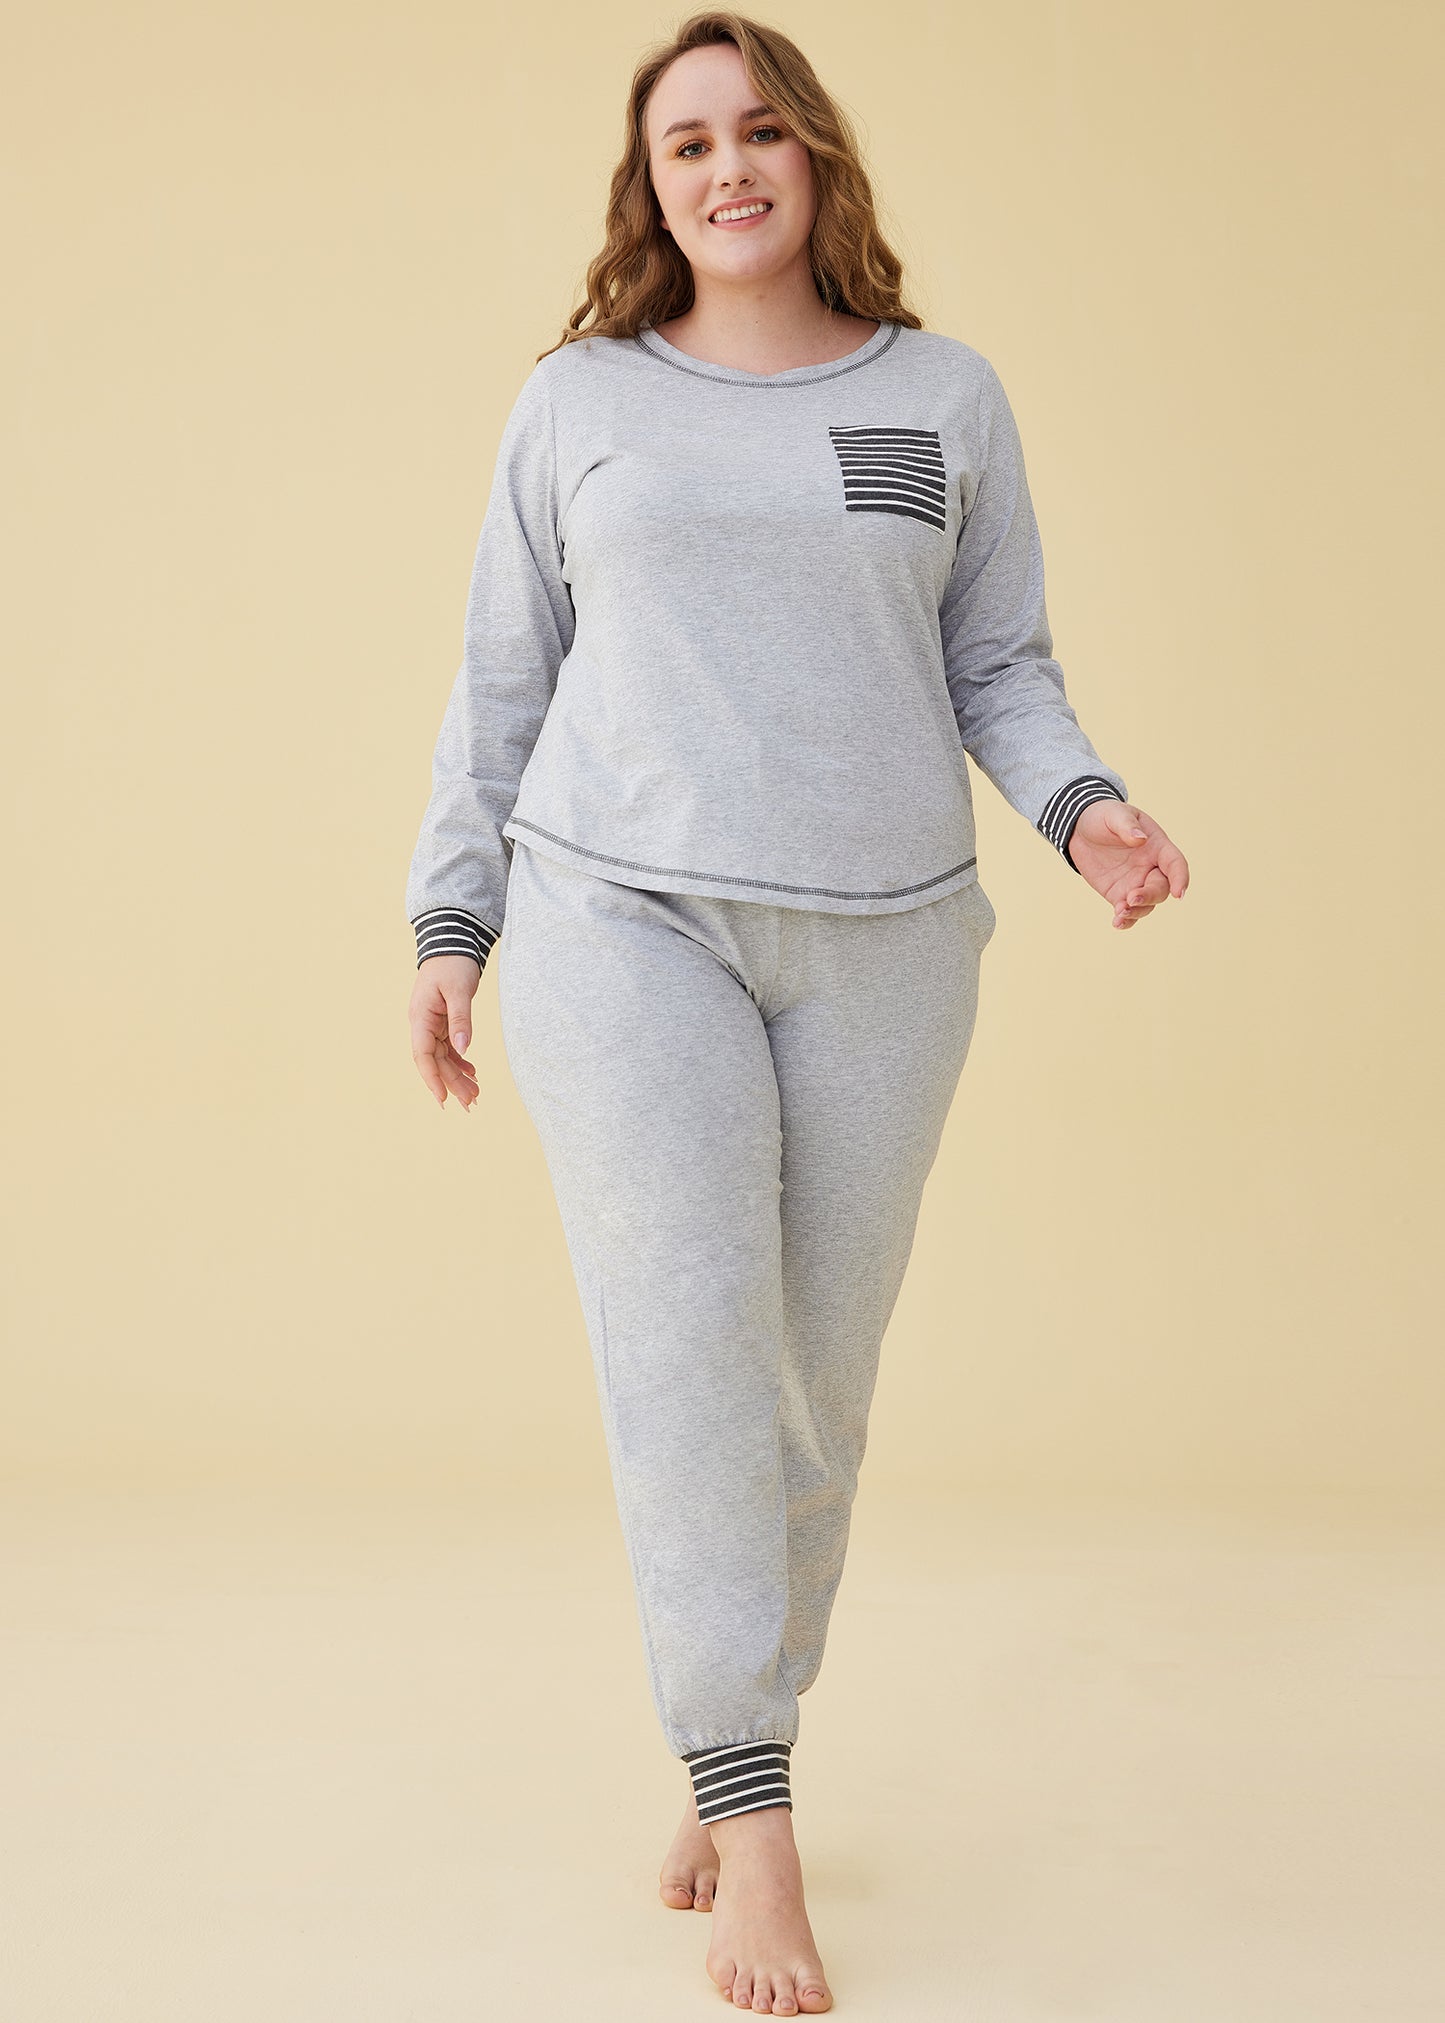 Women's Cotton Pajama Set Long Sleeve Sleepwear